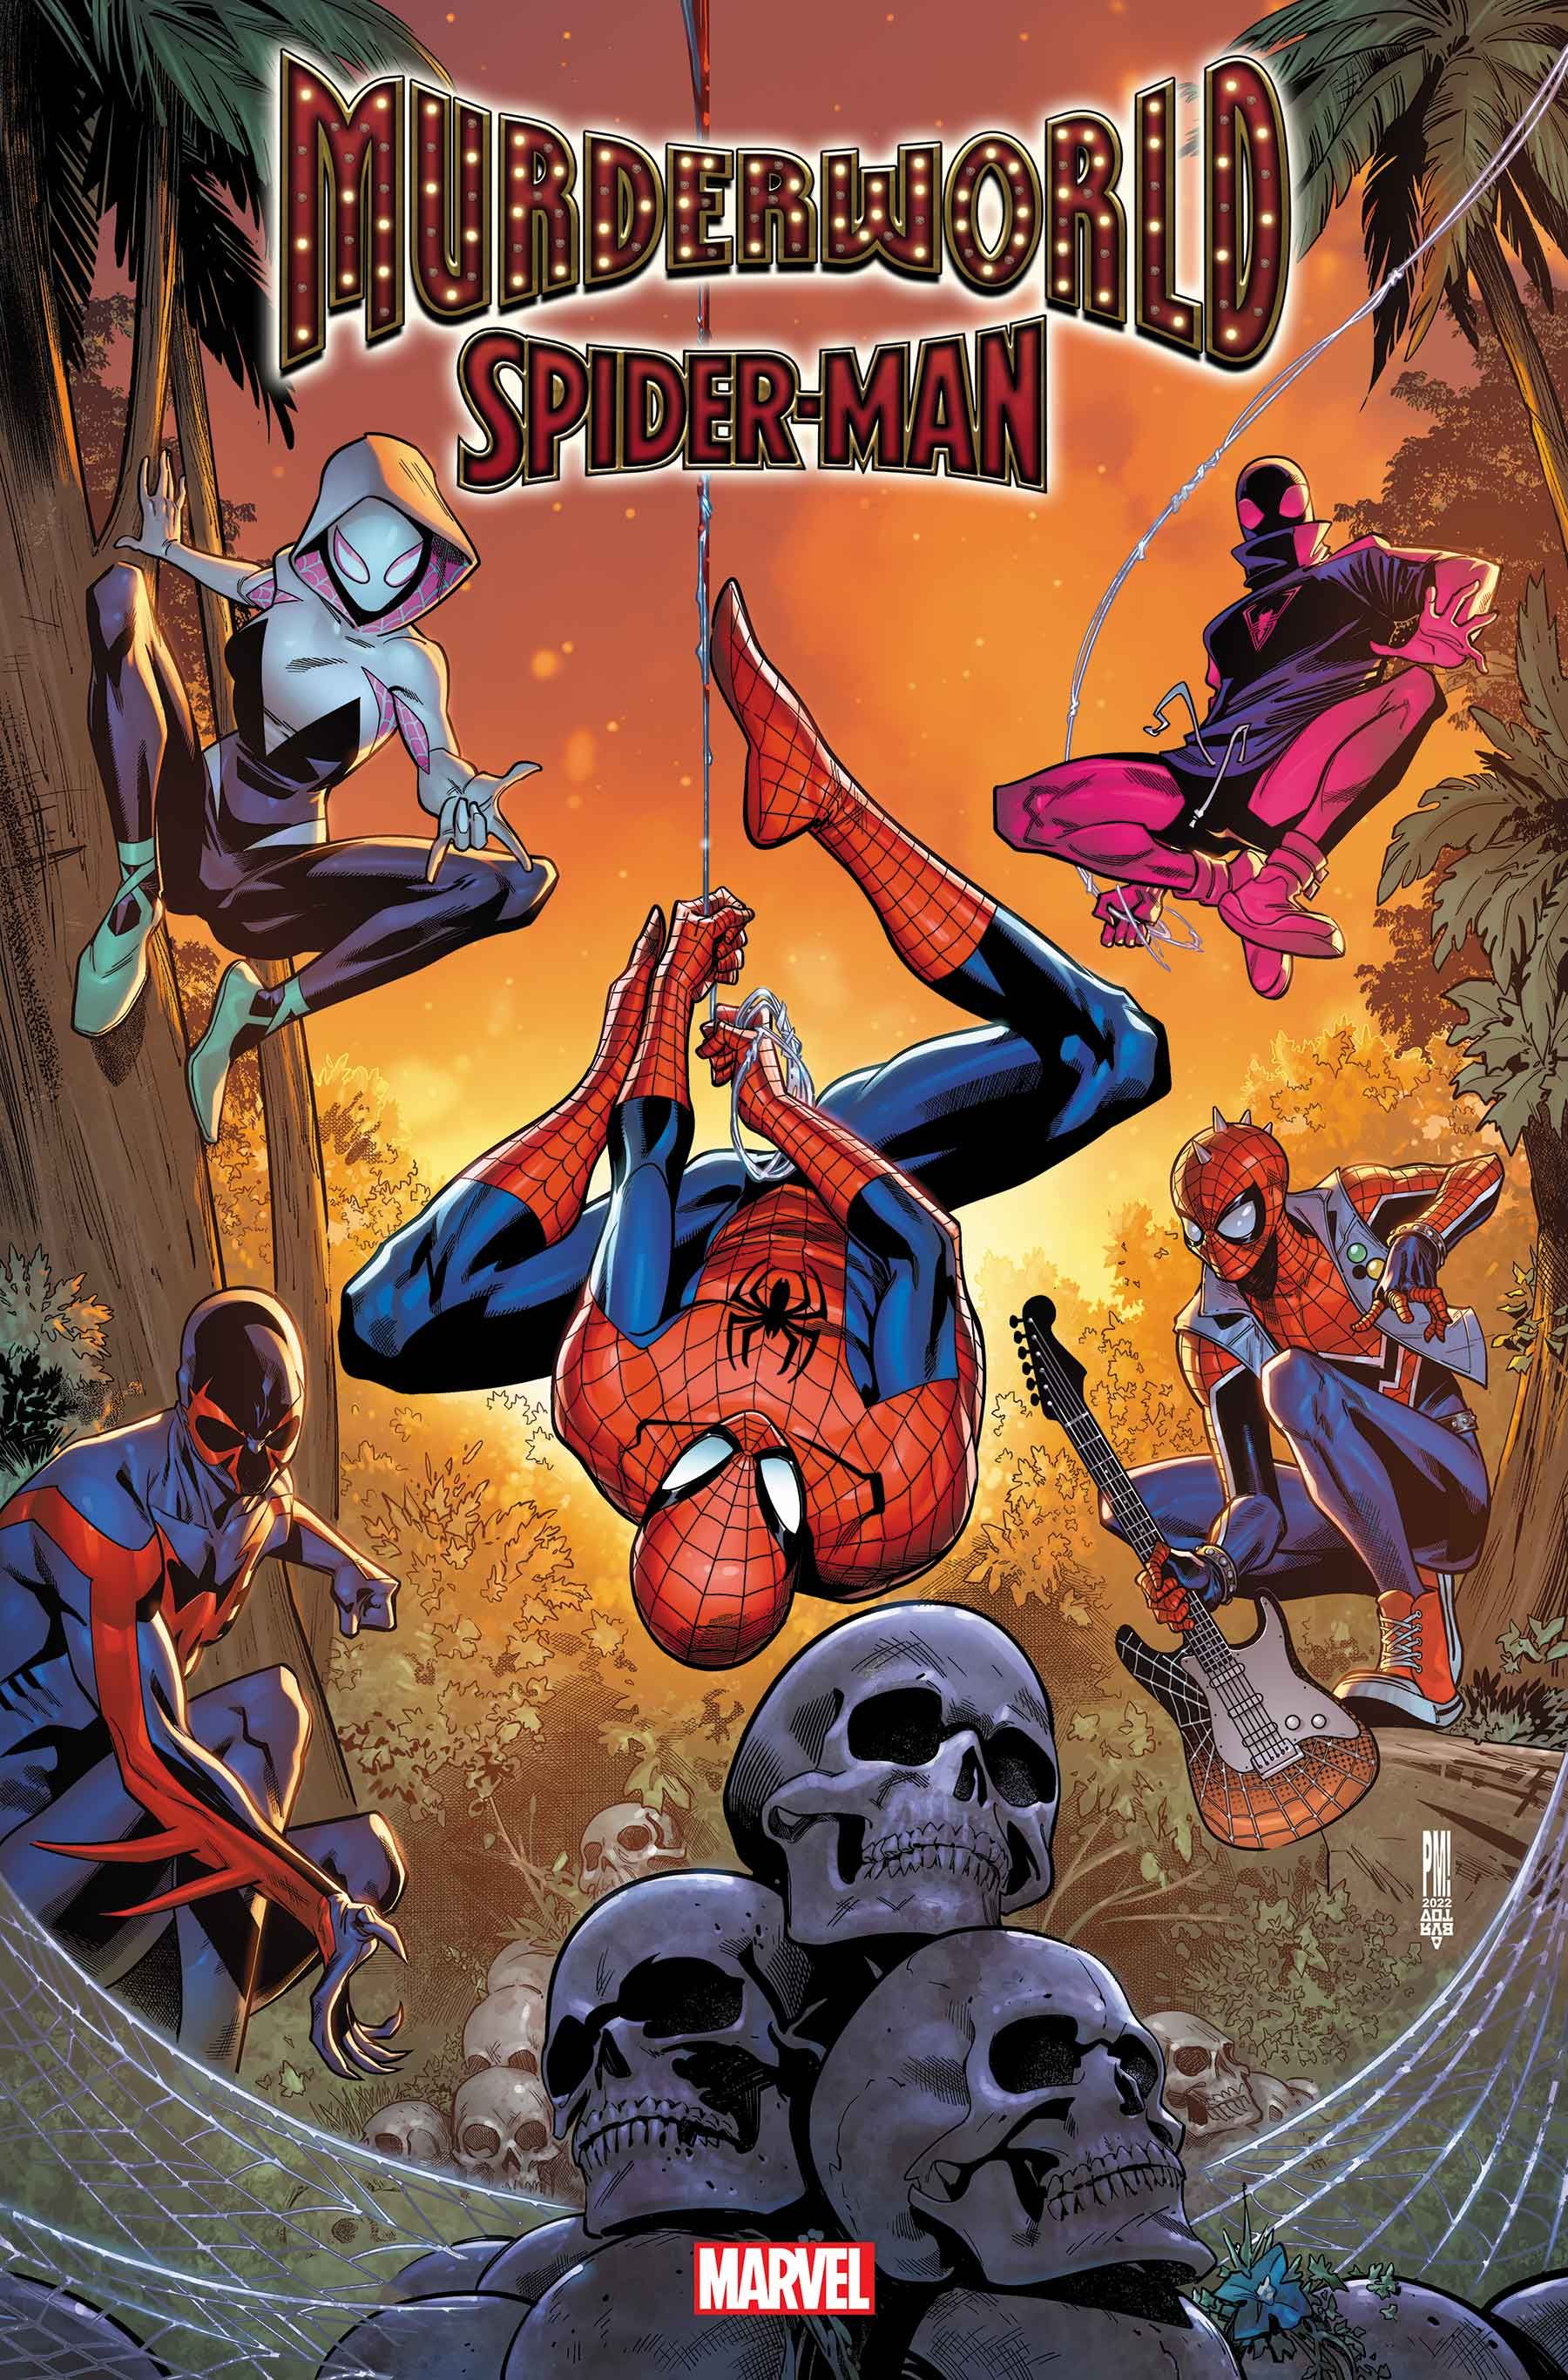 Spider-man hangs above a pile of skulls in murderworld